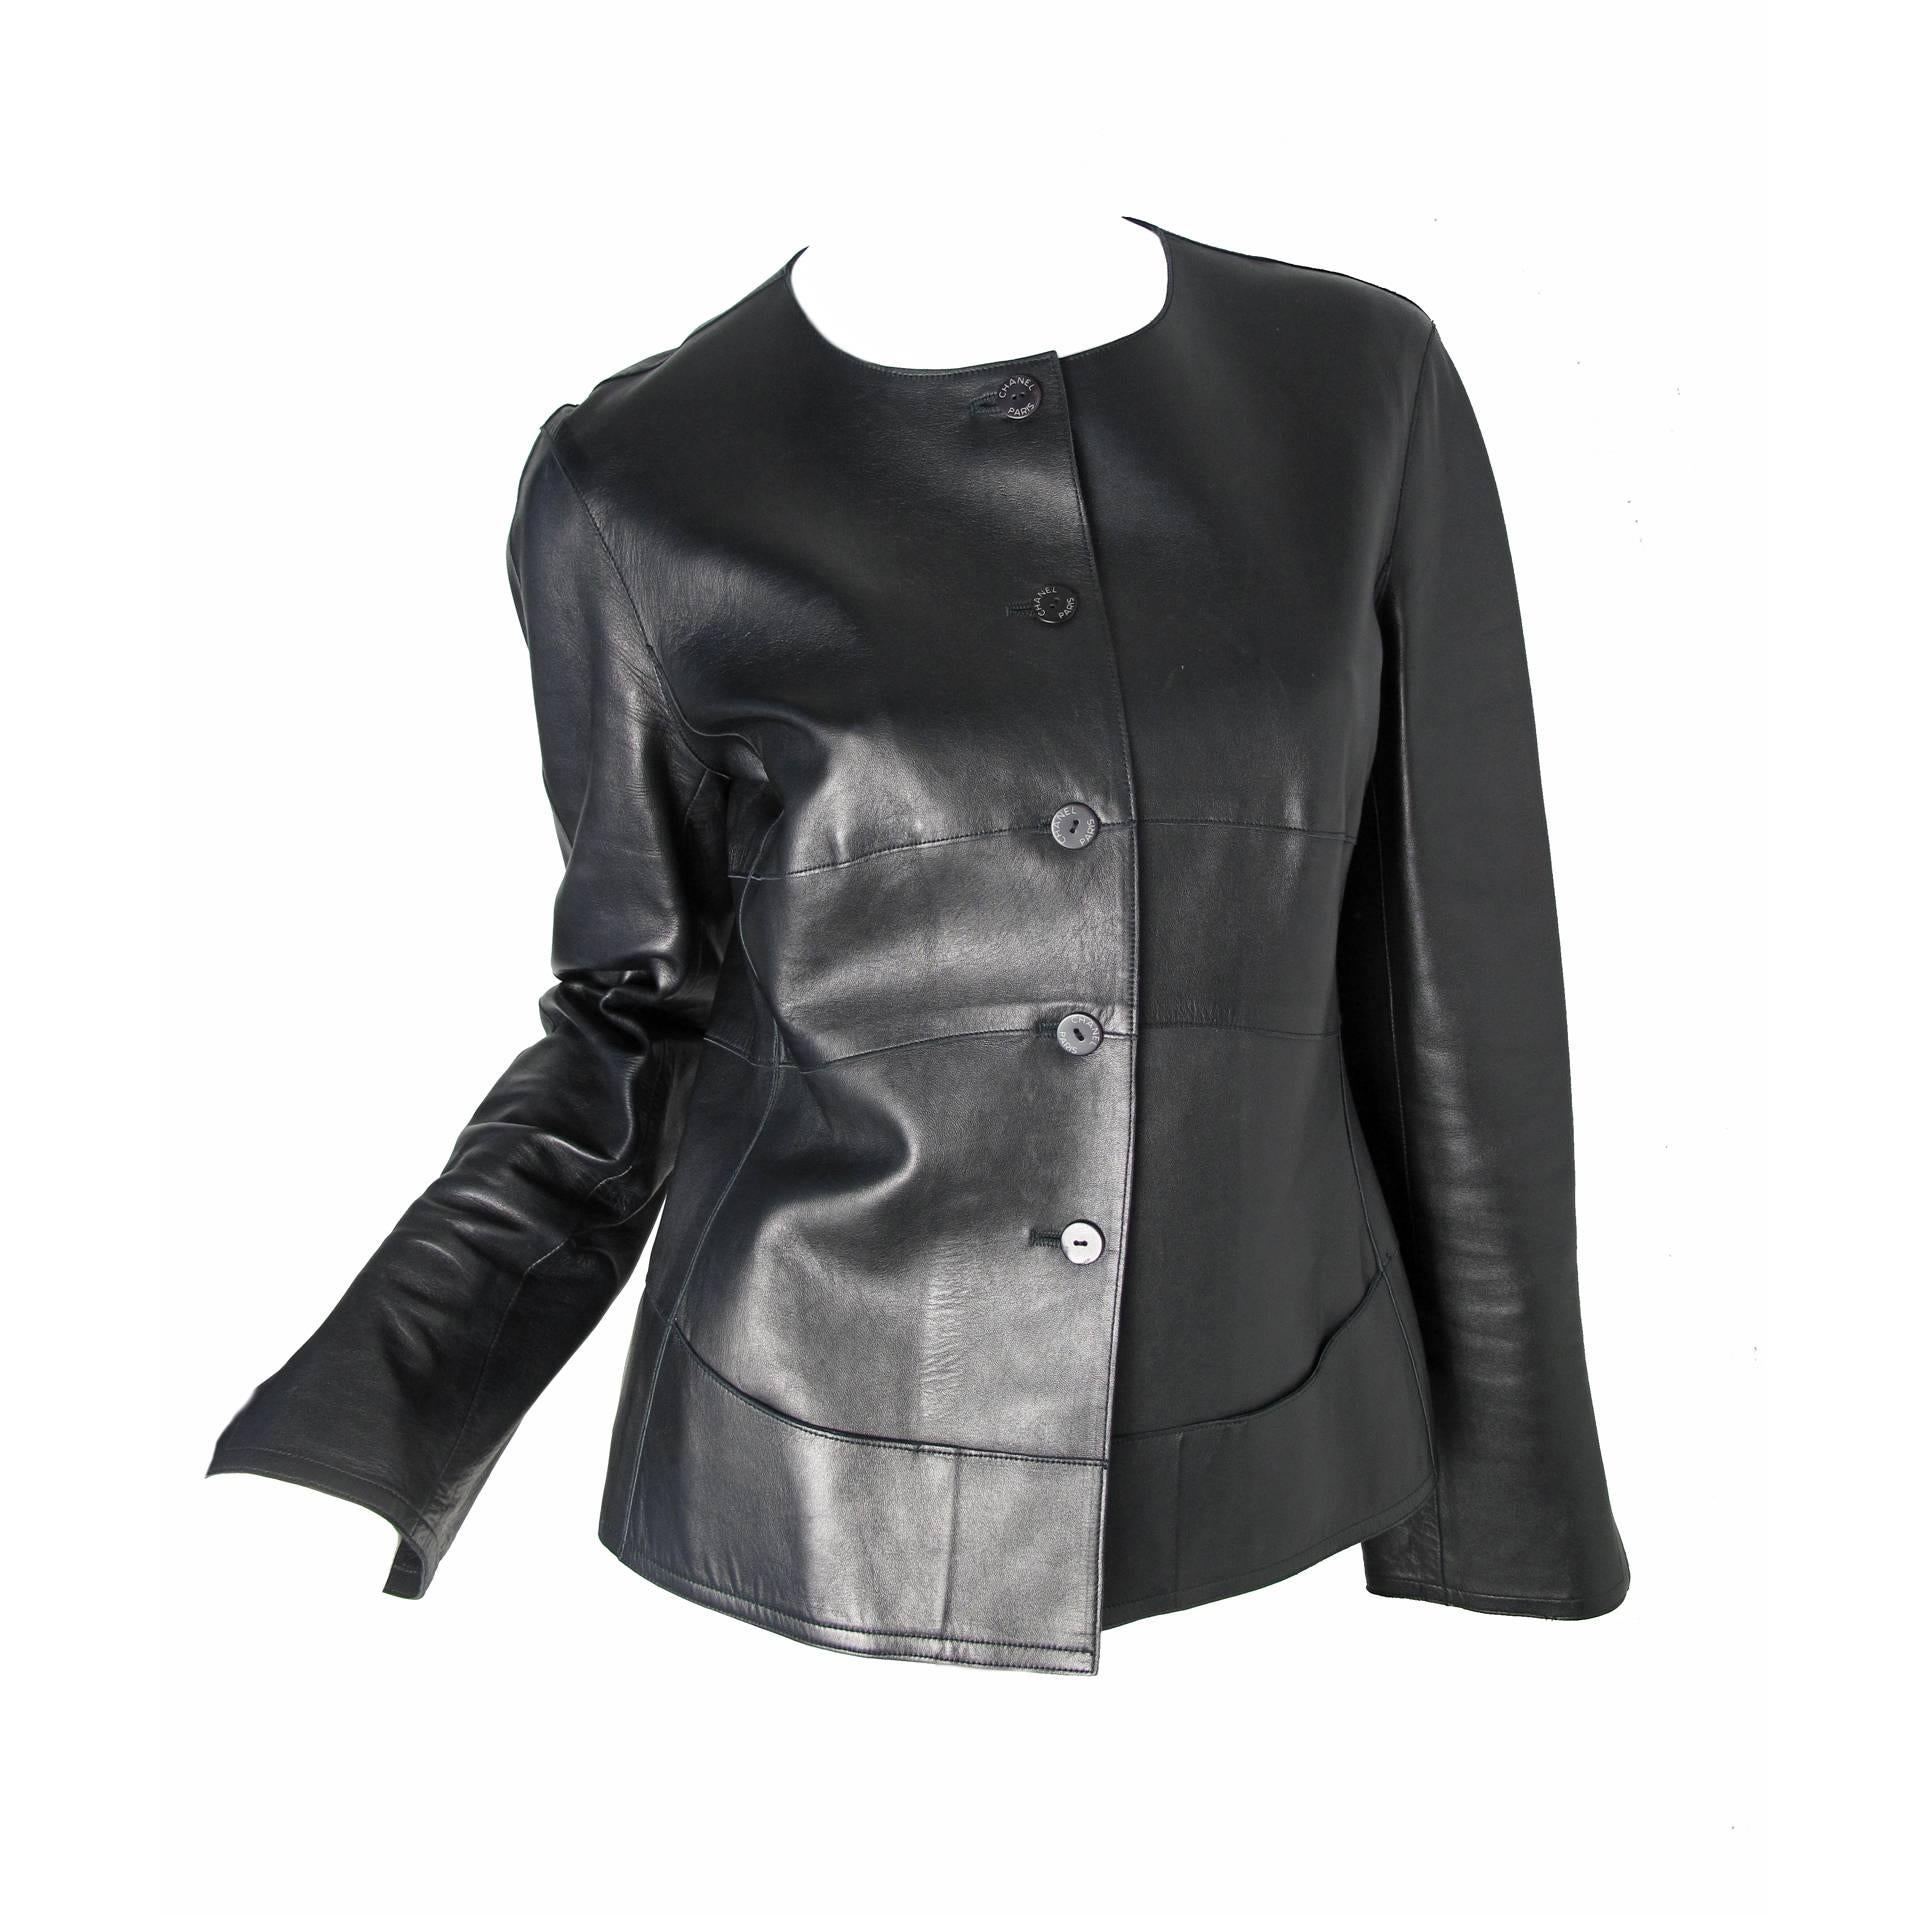 Chanel Black Leather Jacket